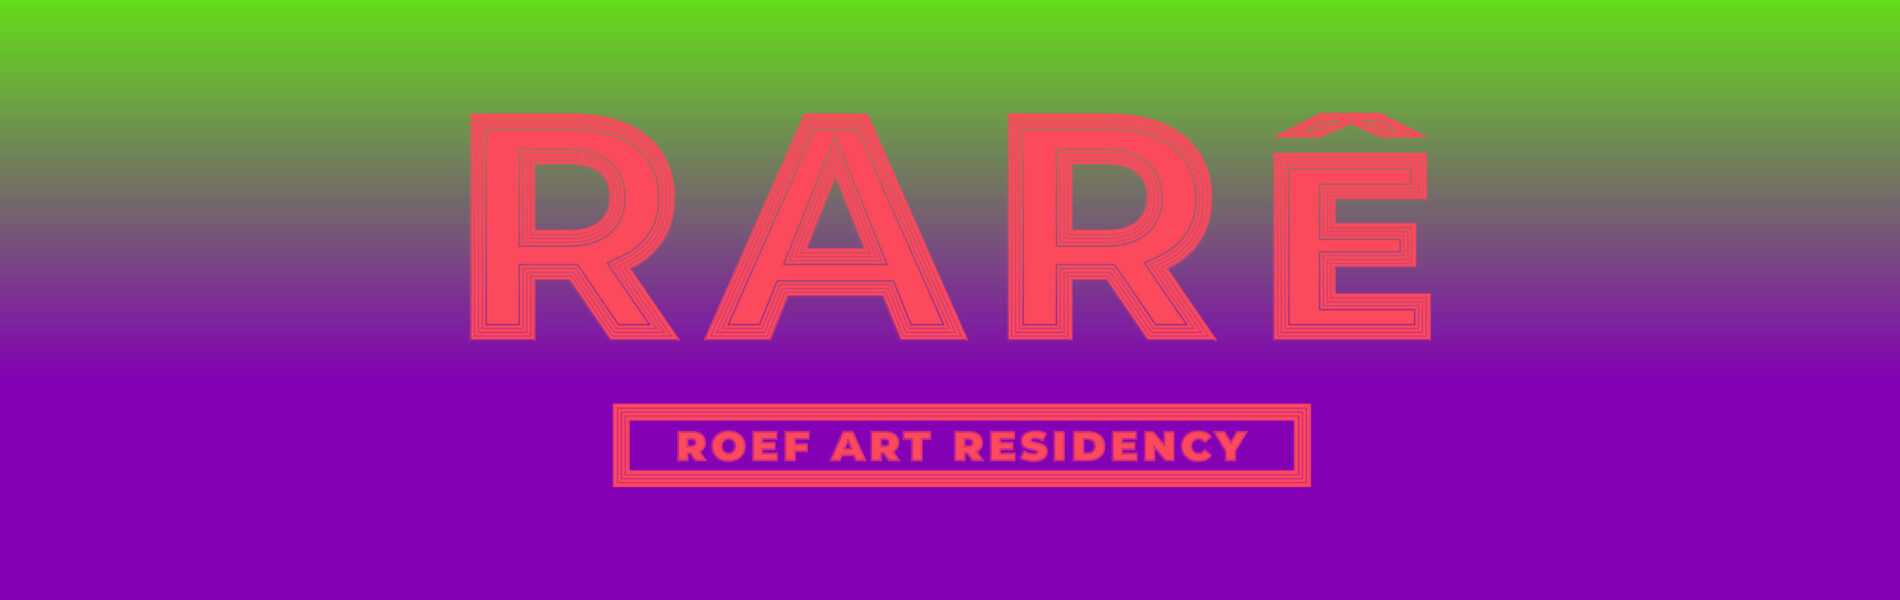 RARe-ROEF-Amsterdam-Zuidoost-Cover-004